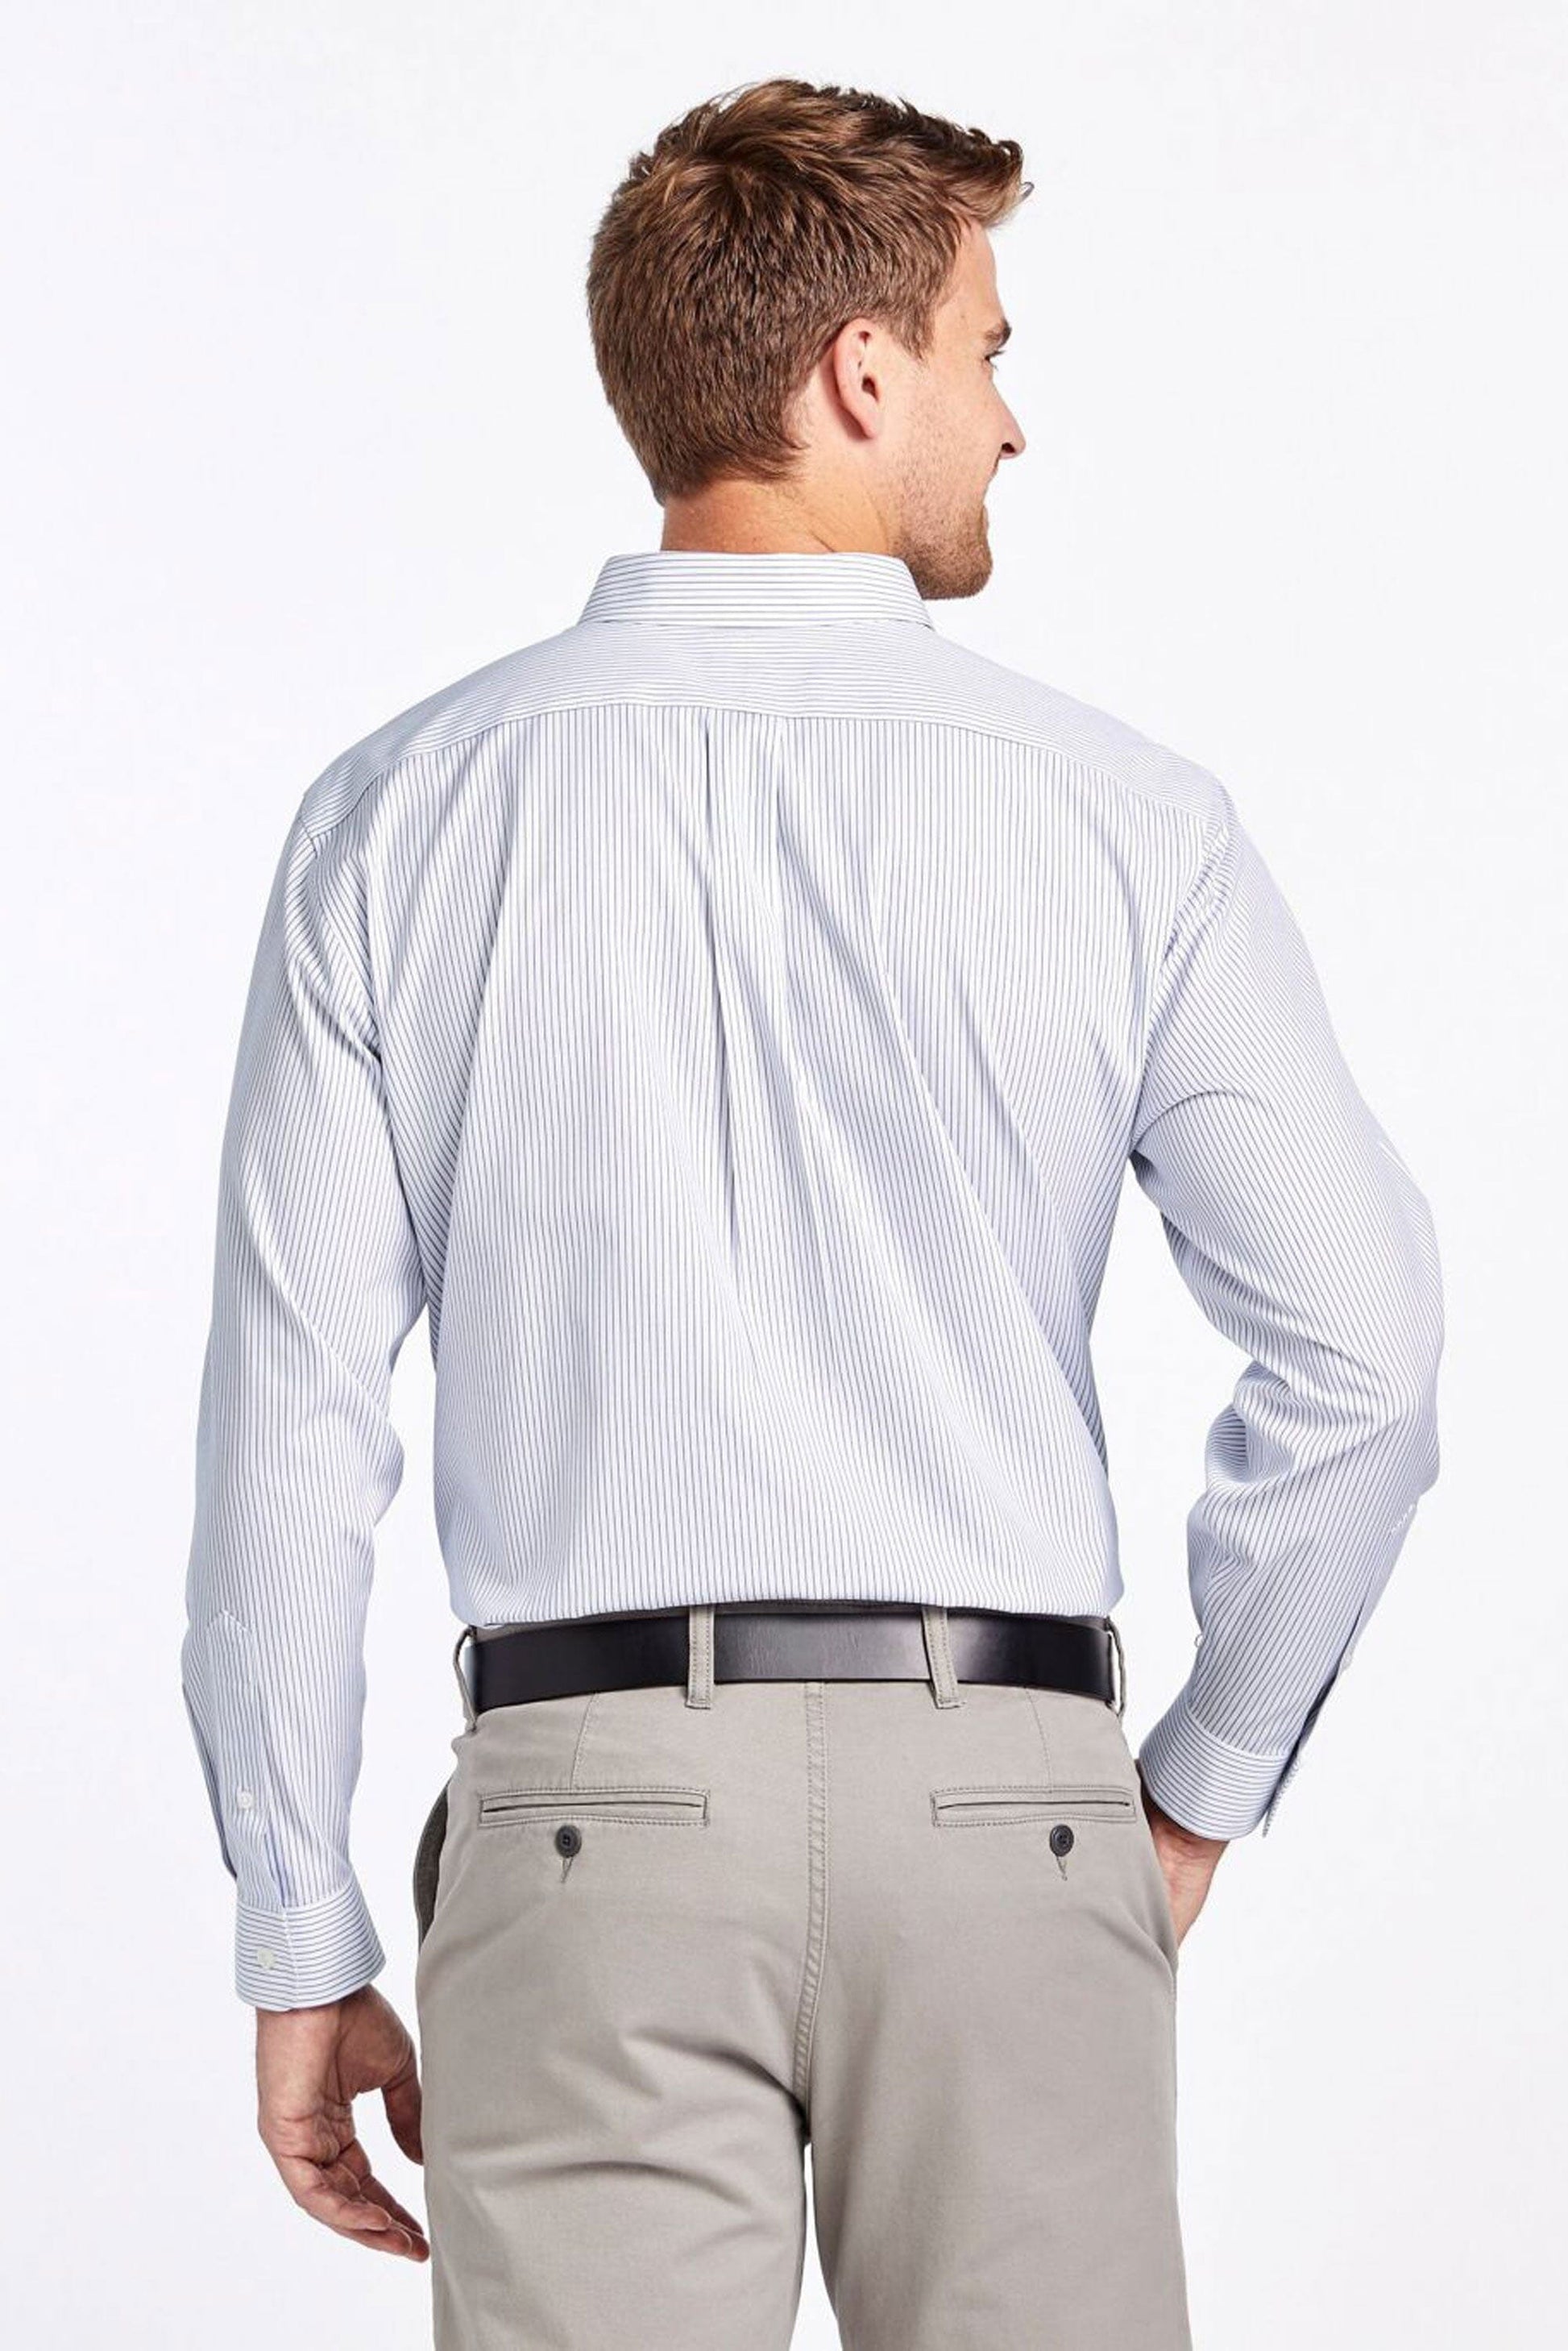 Cut Label Men's Aarhus Lining Style Formal Shirt